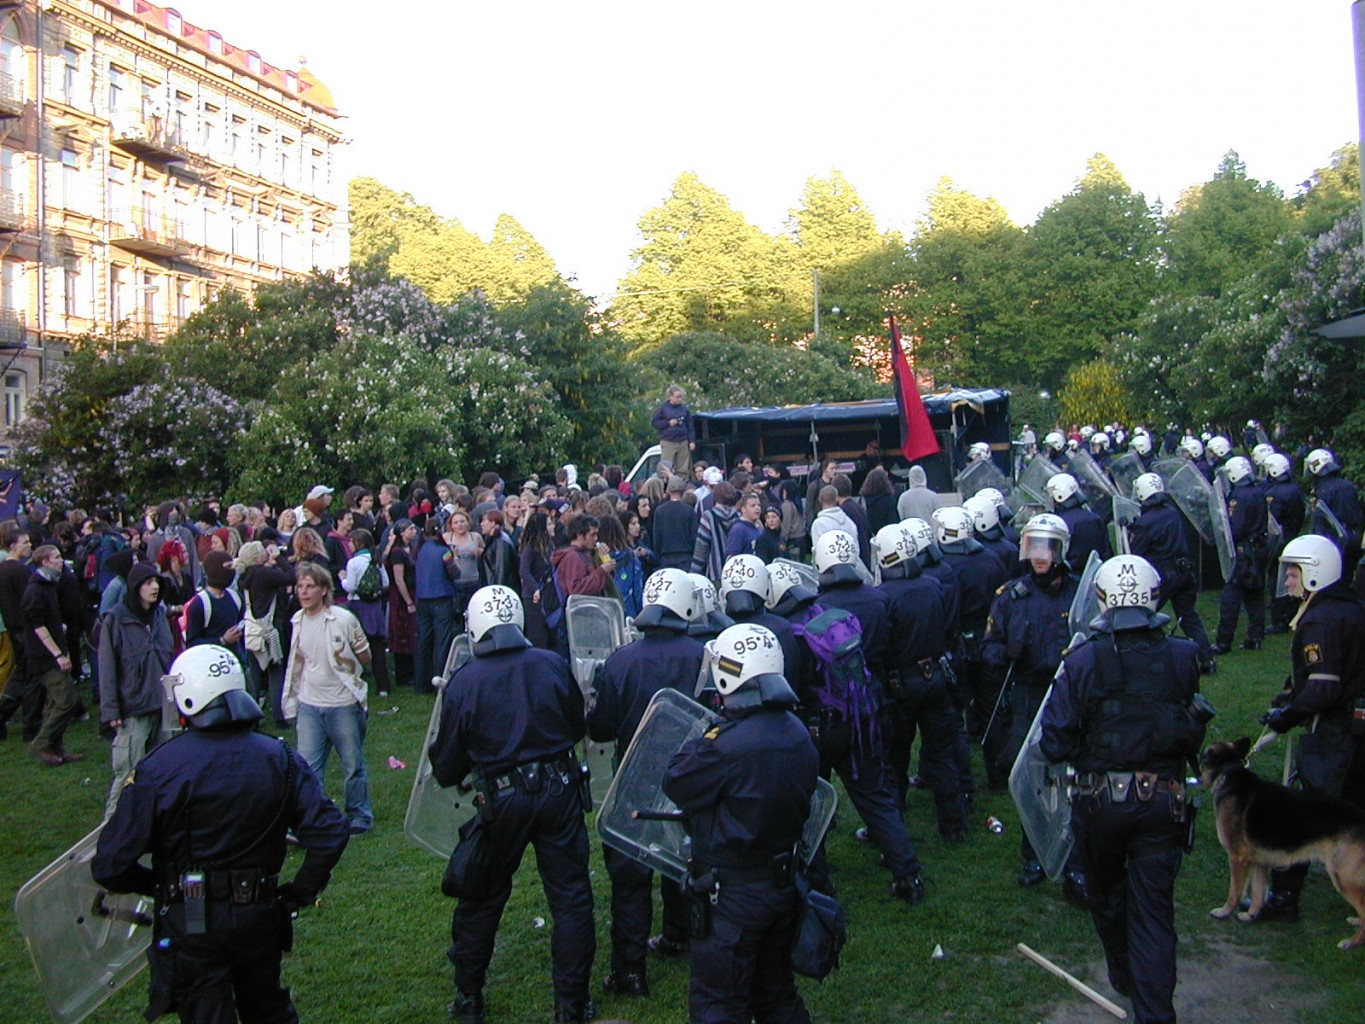 Polisen stormar gatufesten Reclaim the Streets strax innan 19-årige Hannes Westberg skjuts i magen. Foto: Jan-Åke Eriksson.